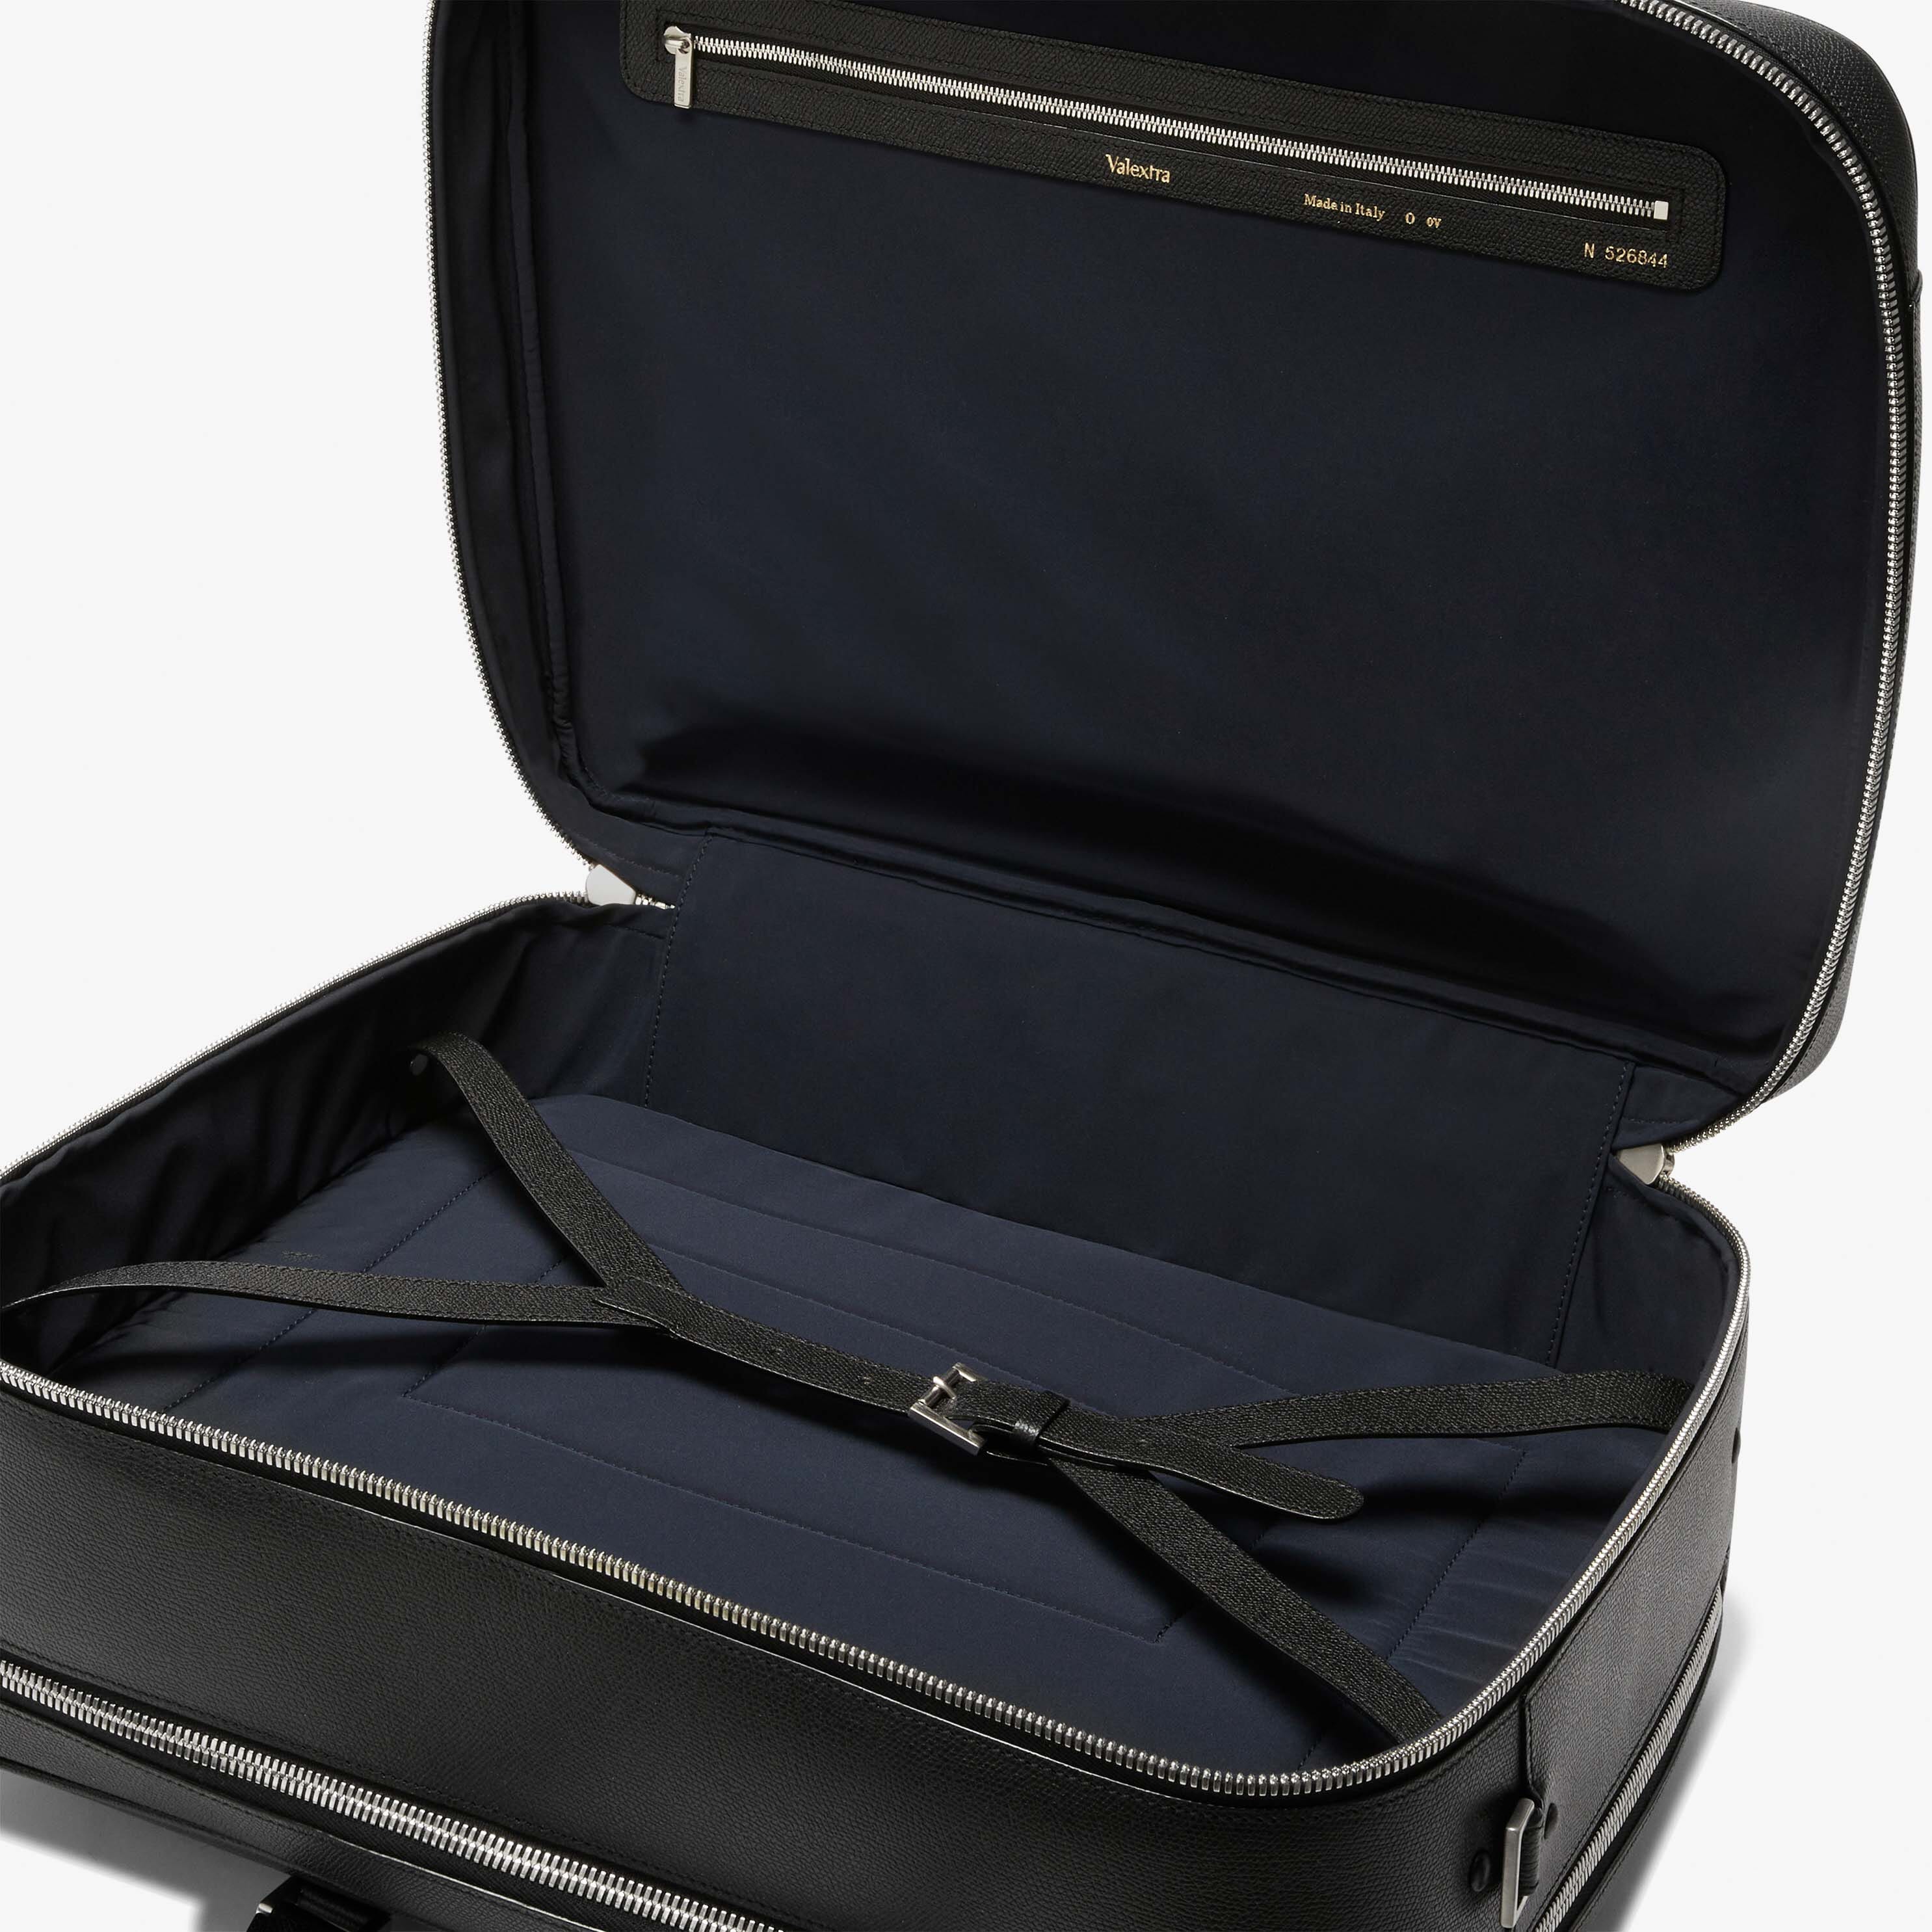 Avietta Travel Bag Two Chambers - Black - Vitello VS - Valextra - 4